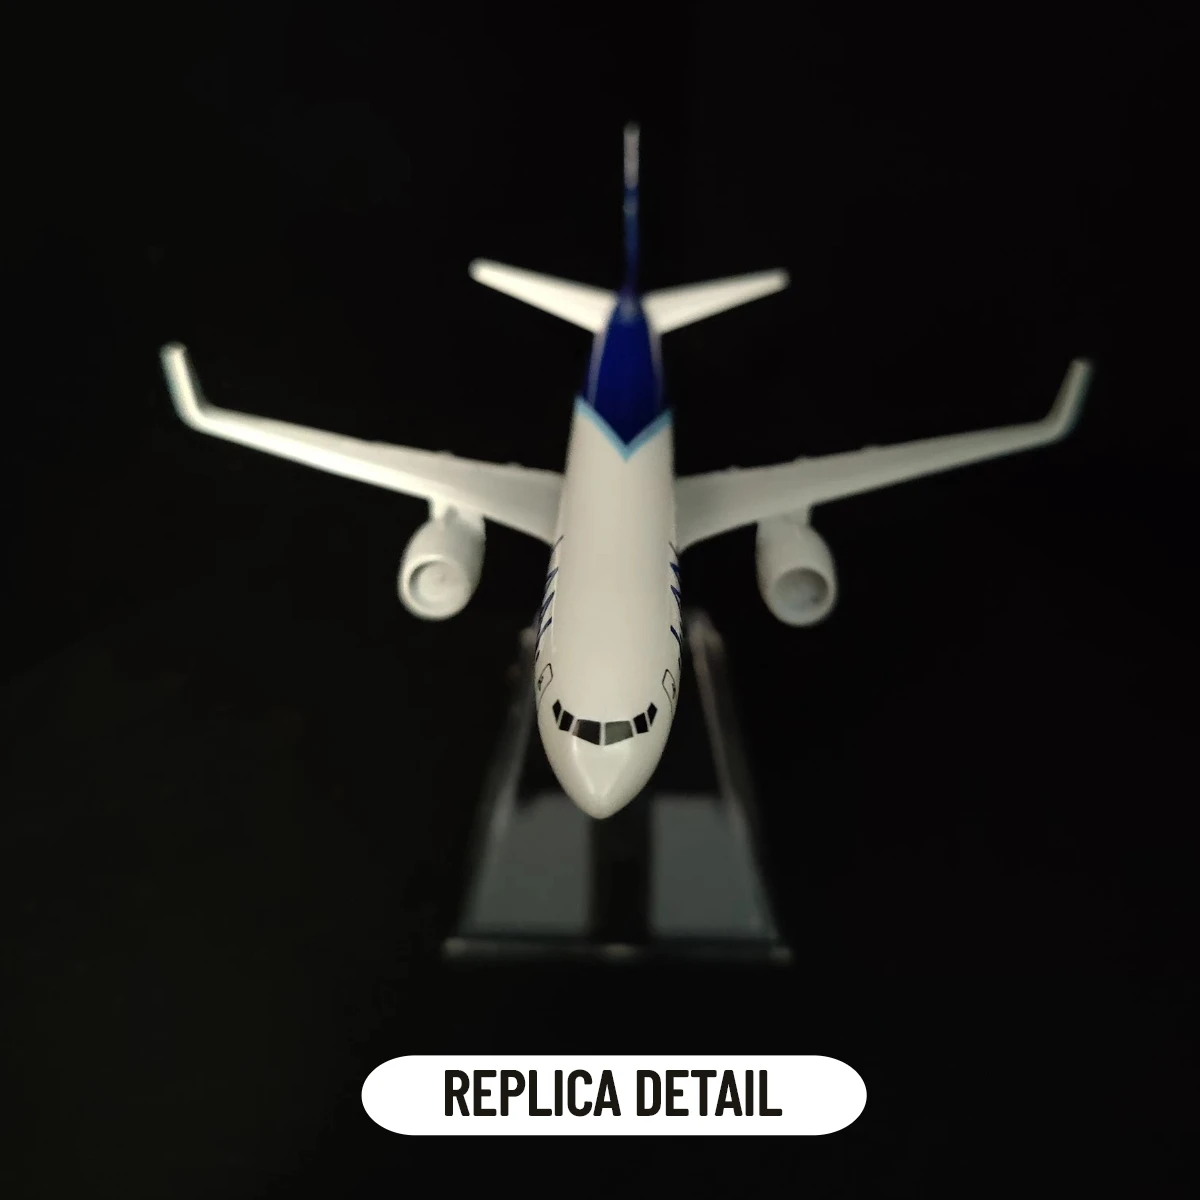 Scale 1:400 Metal Aiplane Replica 15cm LAN LATAM Airlines Model Aviation Miniature Xmas Kids Room Decor Gift Toys for Boys |